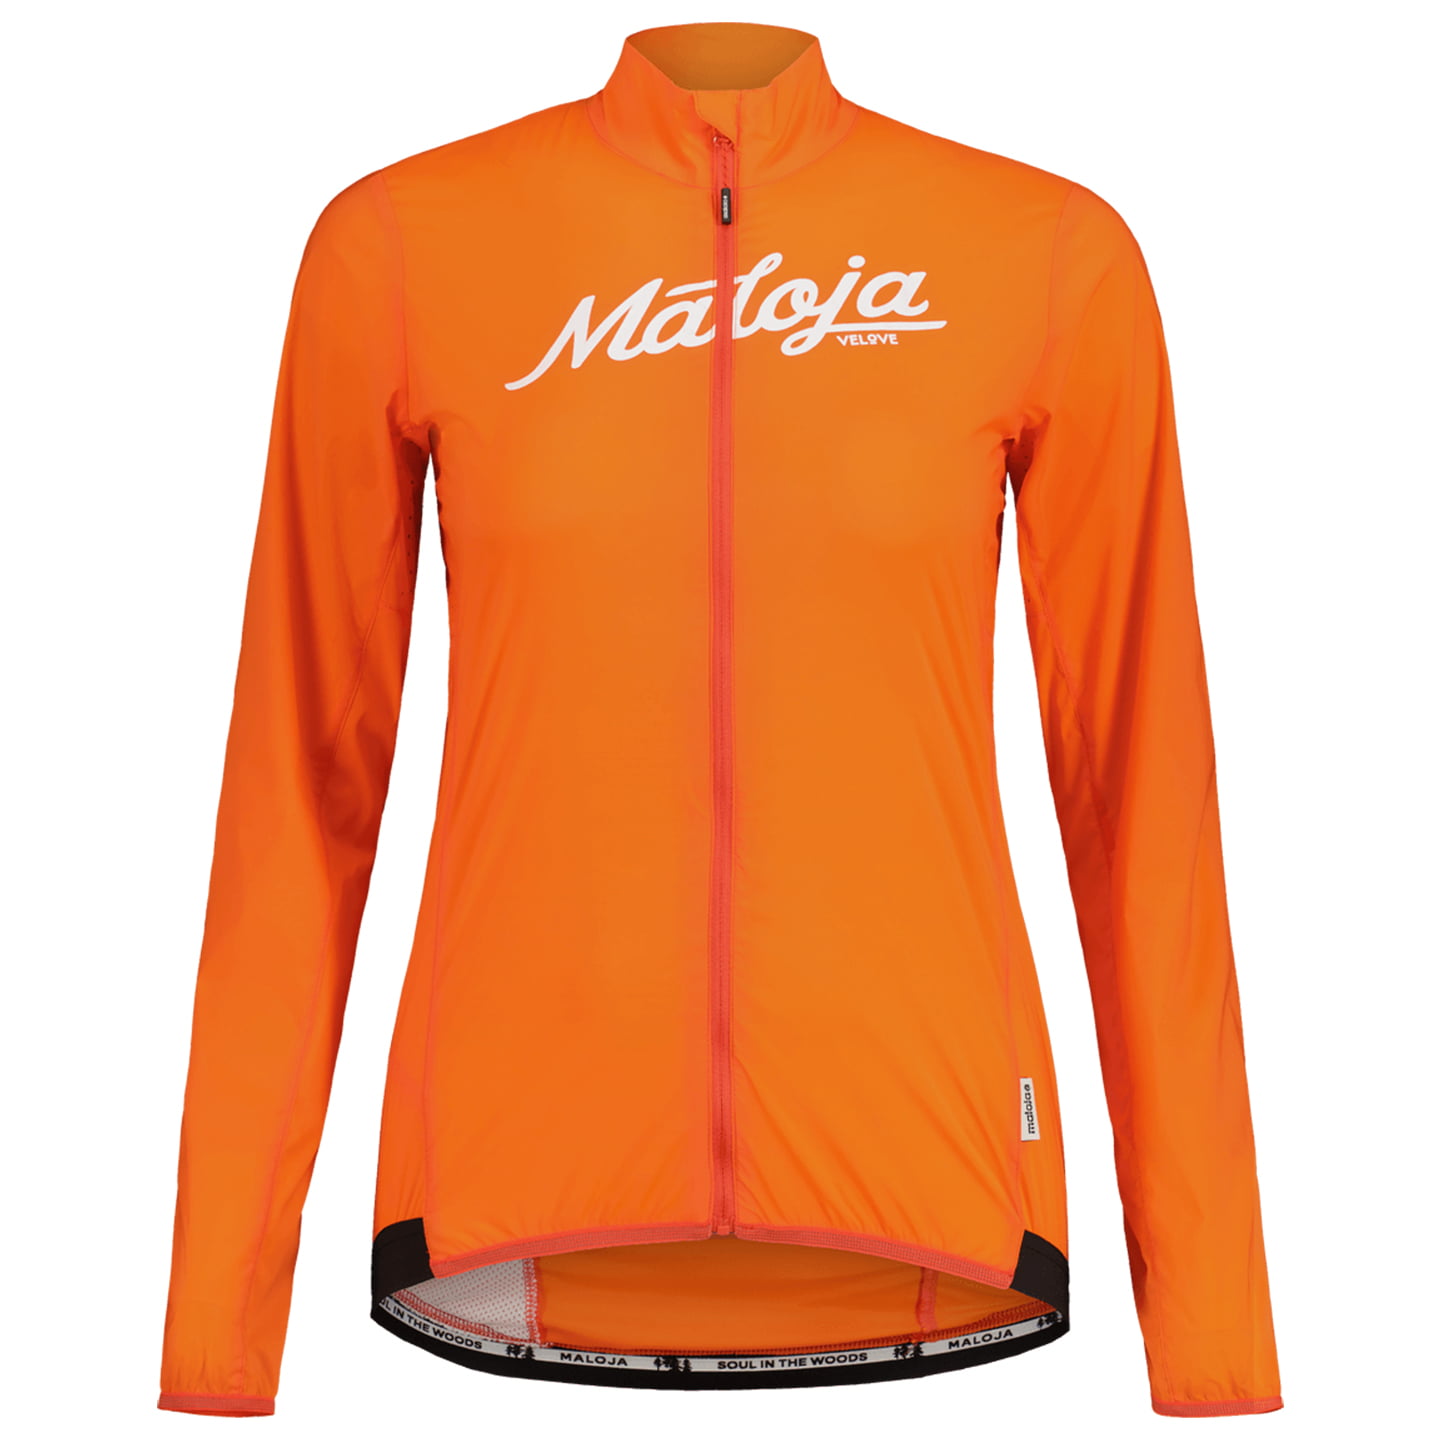 MALOJA SeisM. Women’s Wind Jacket Women’s Wind Jacket, size M, Bike jacket, Cycling clothing